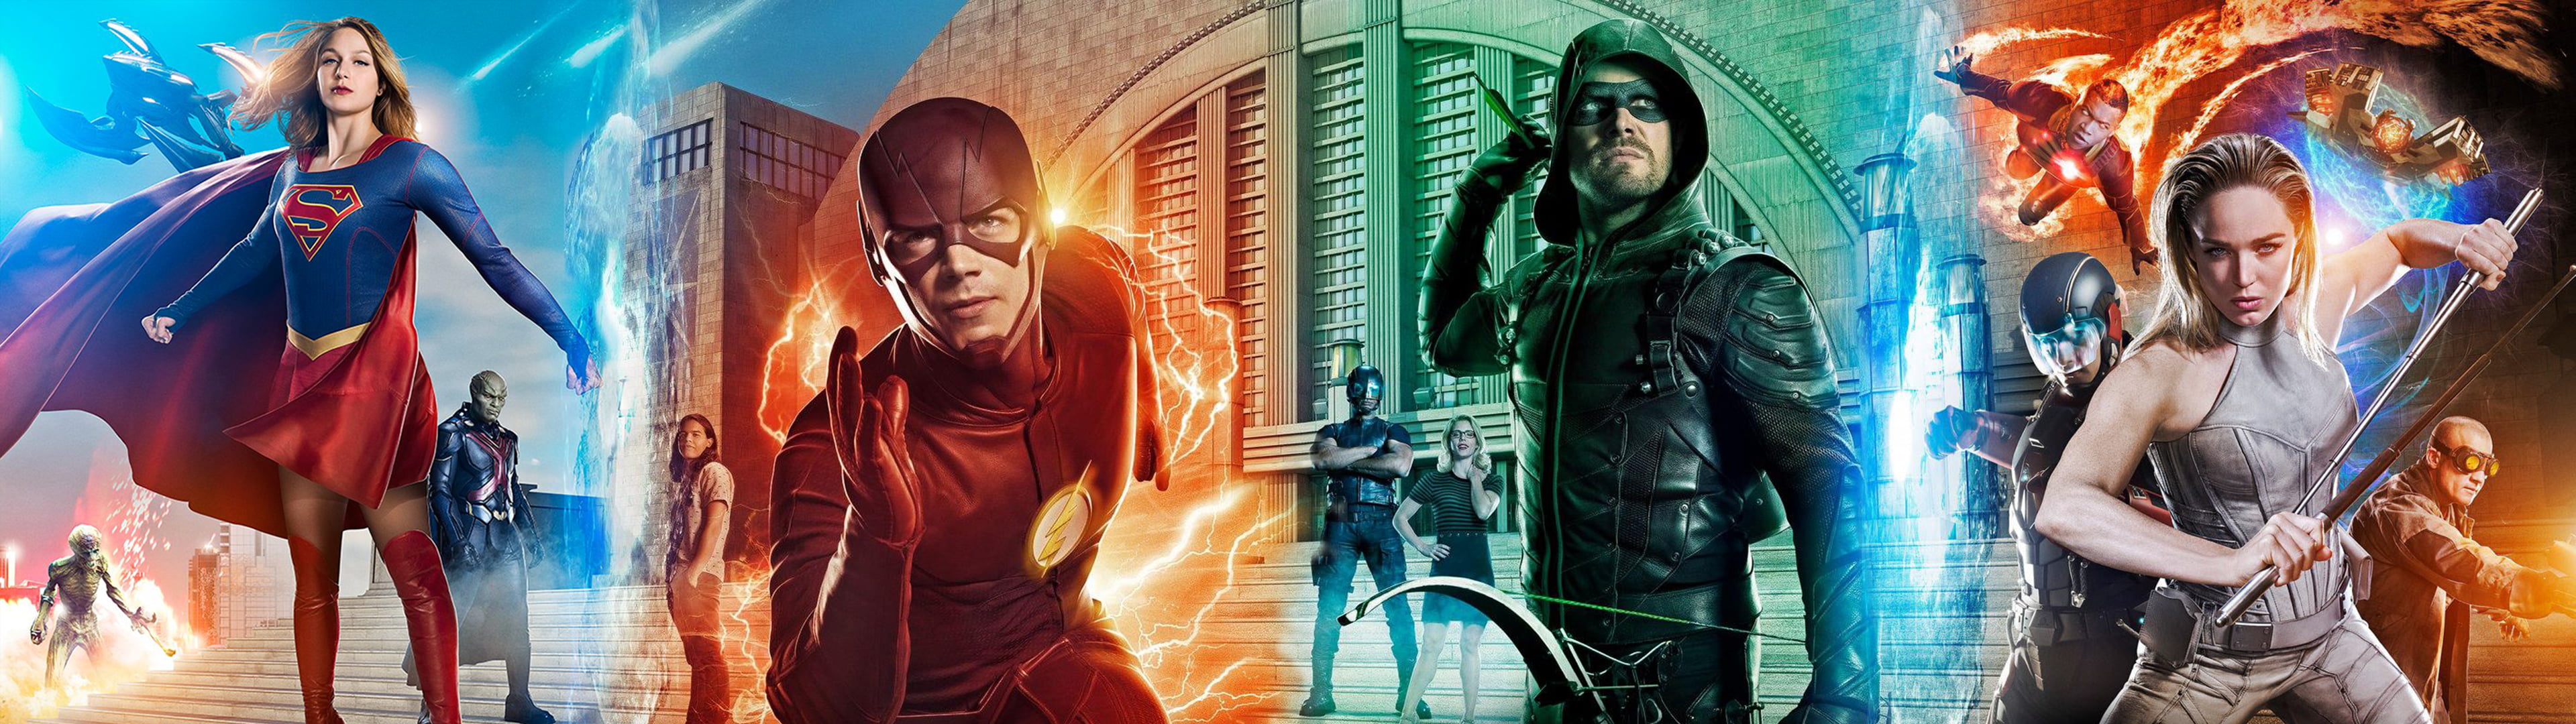 tv show, crossover, arrow (dc comics), flash, supergirl